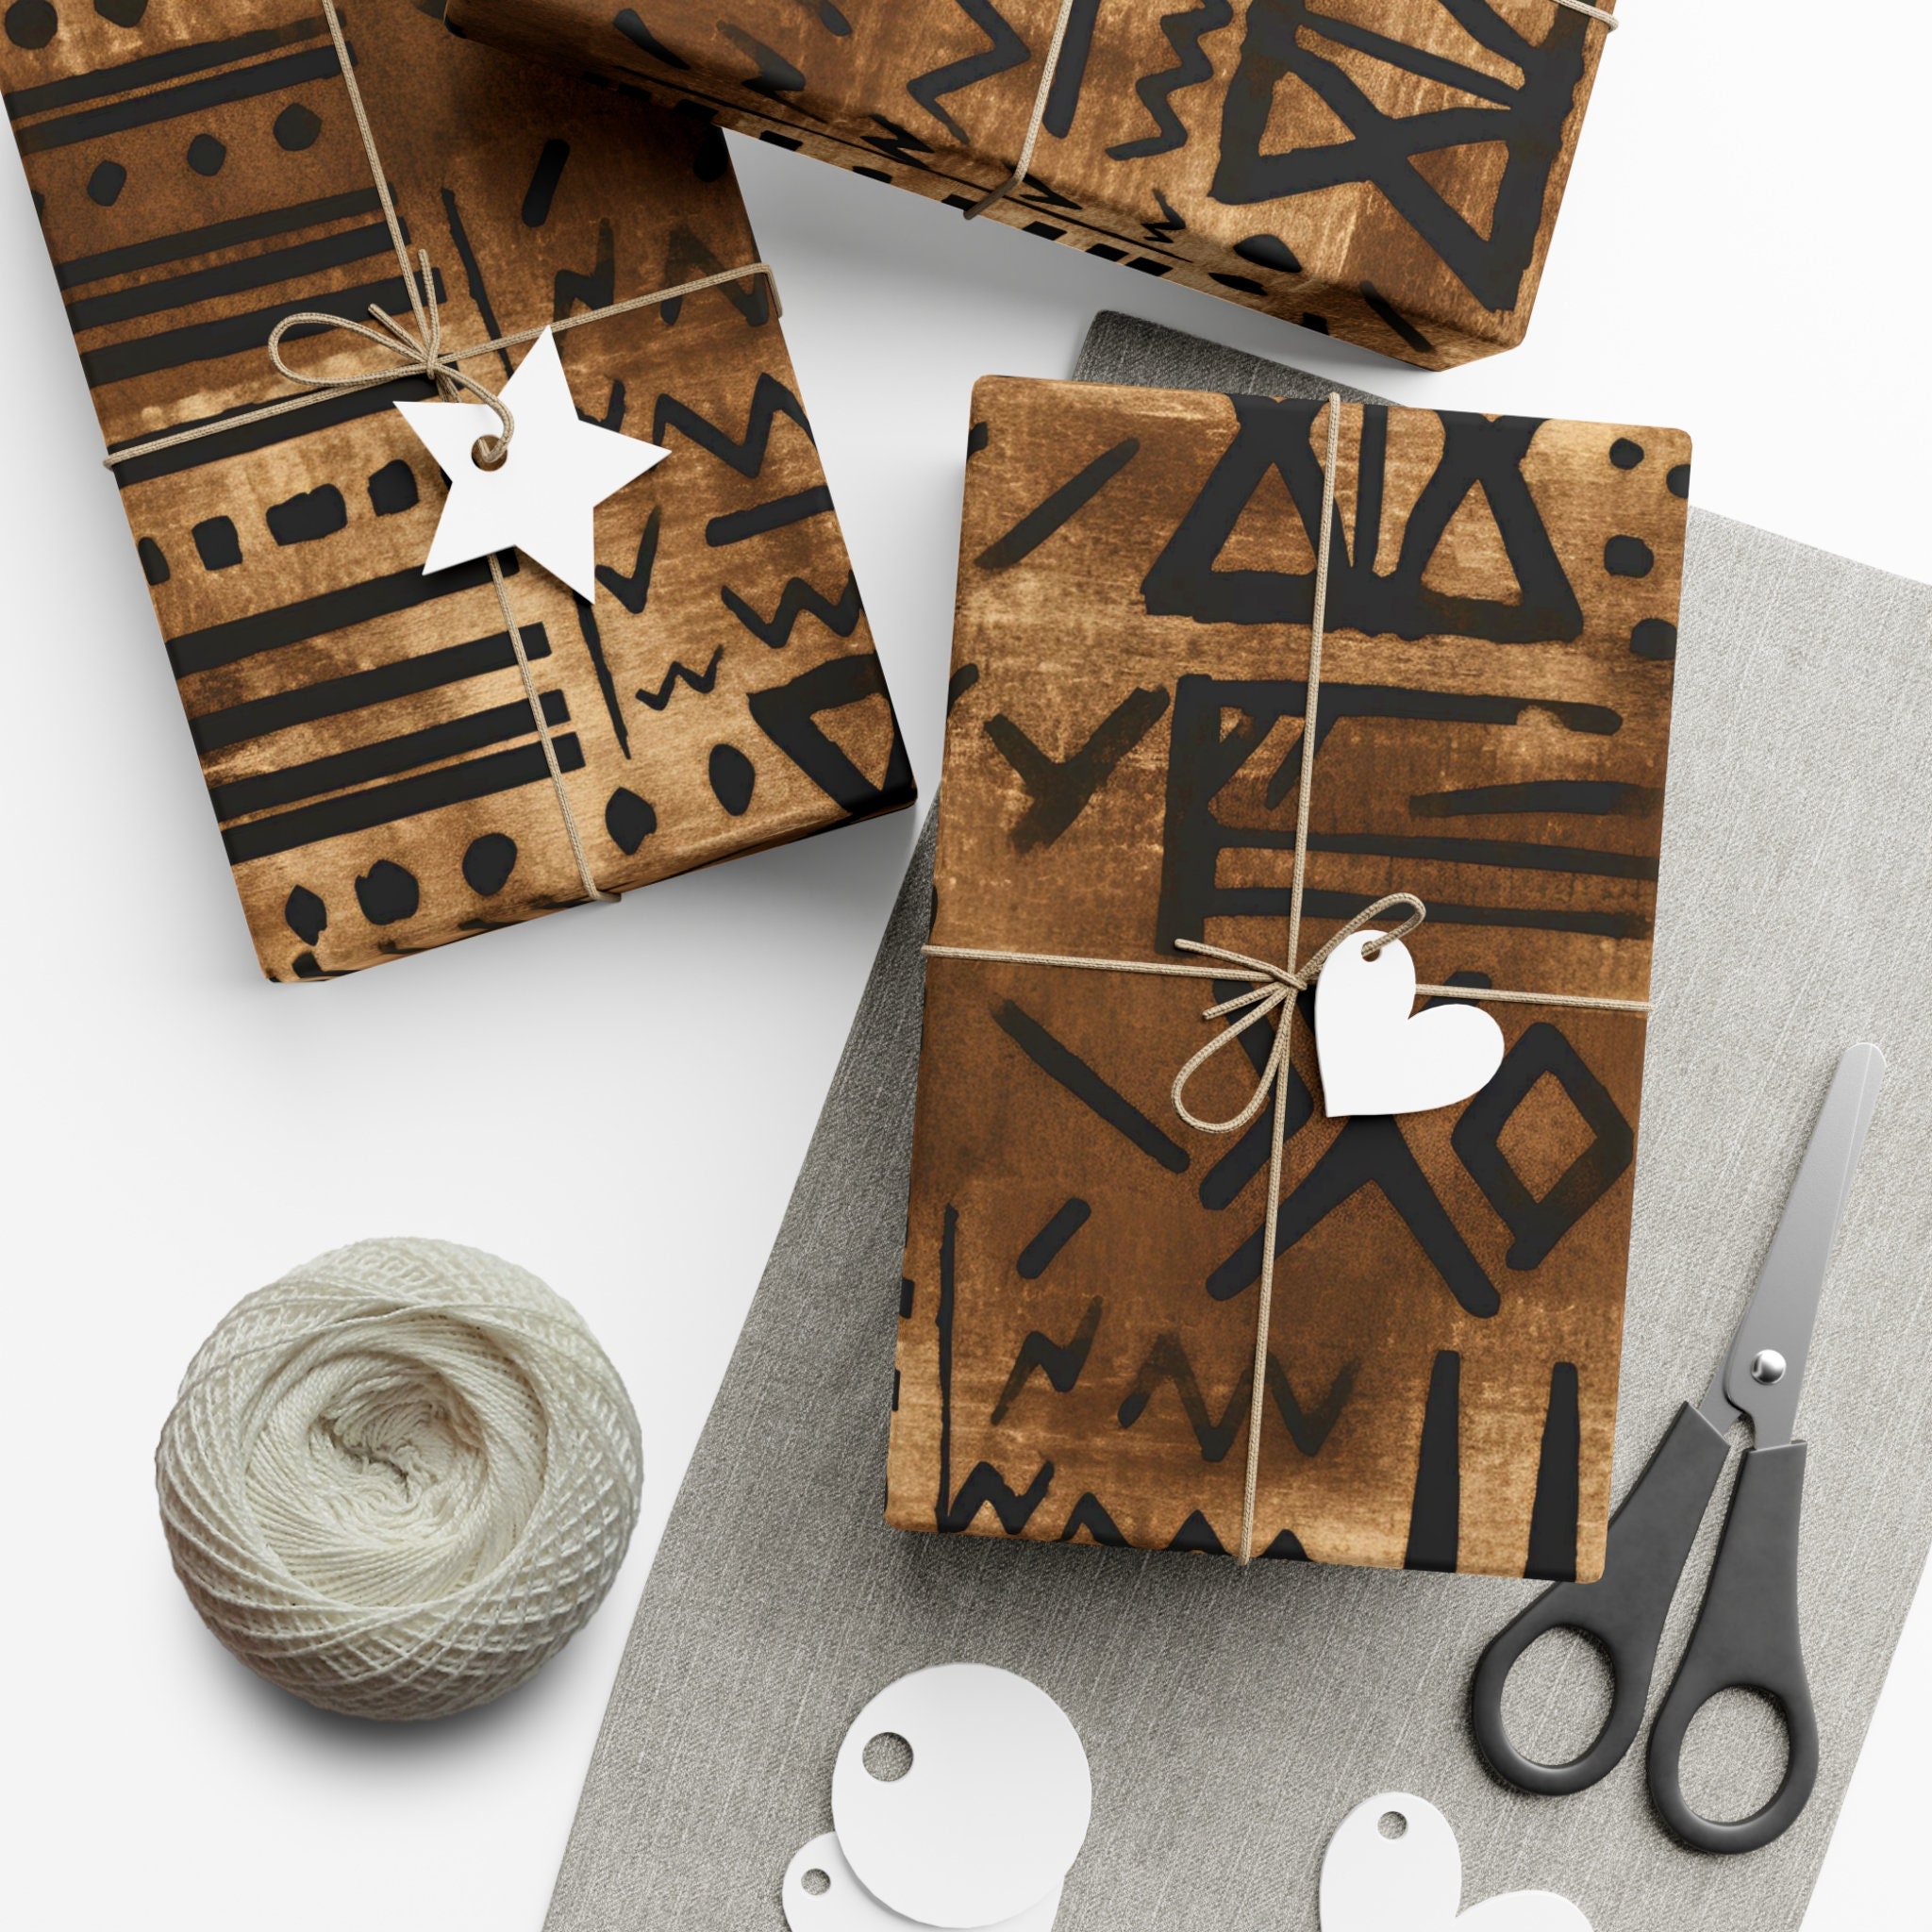 Original afroprint wrapping gift paper by lakemita - Holiday decoration -  Afrikrea